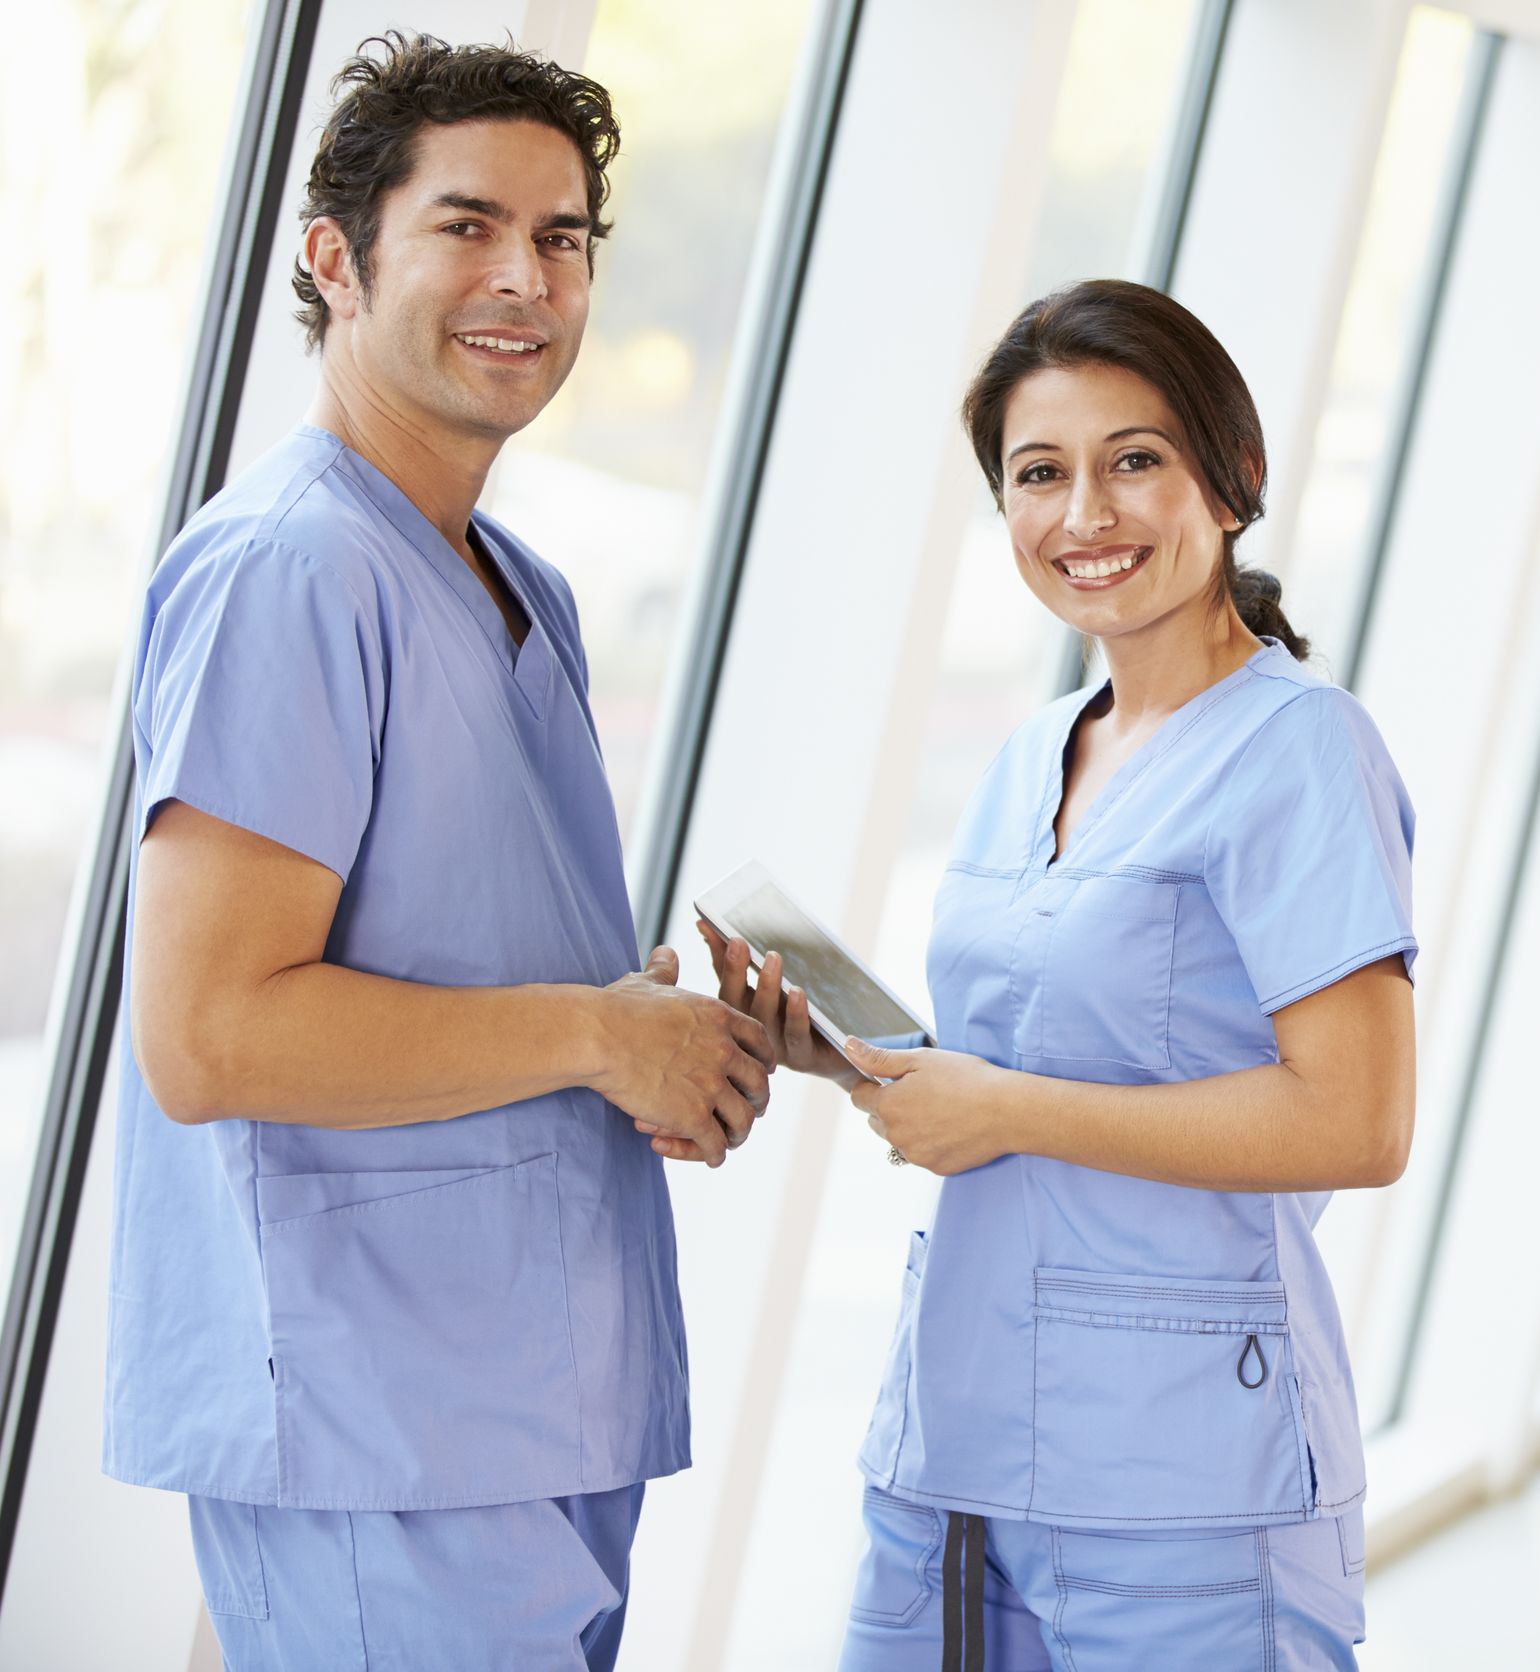 smiling doctors in scrubs